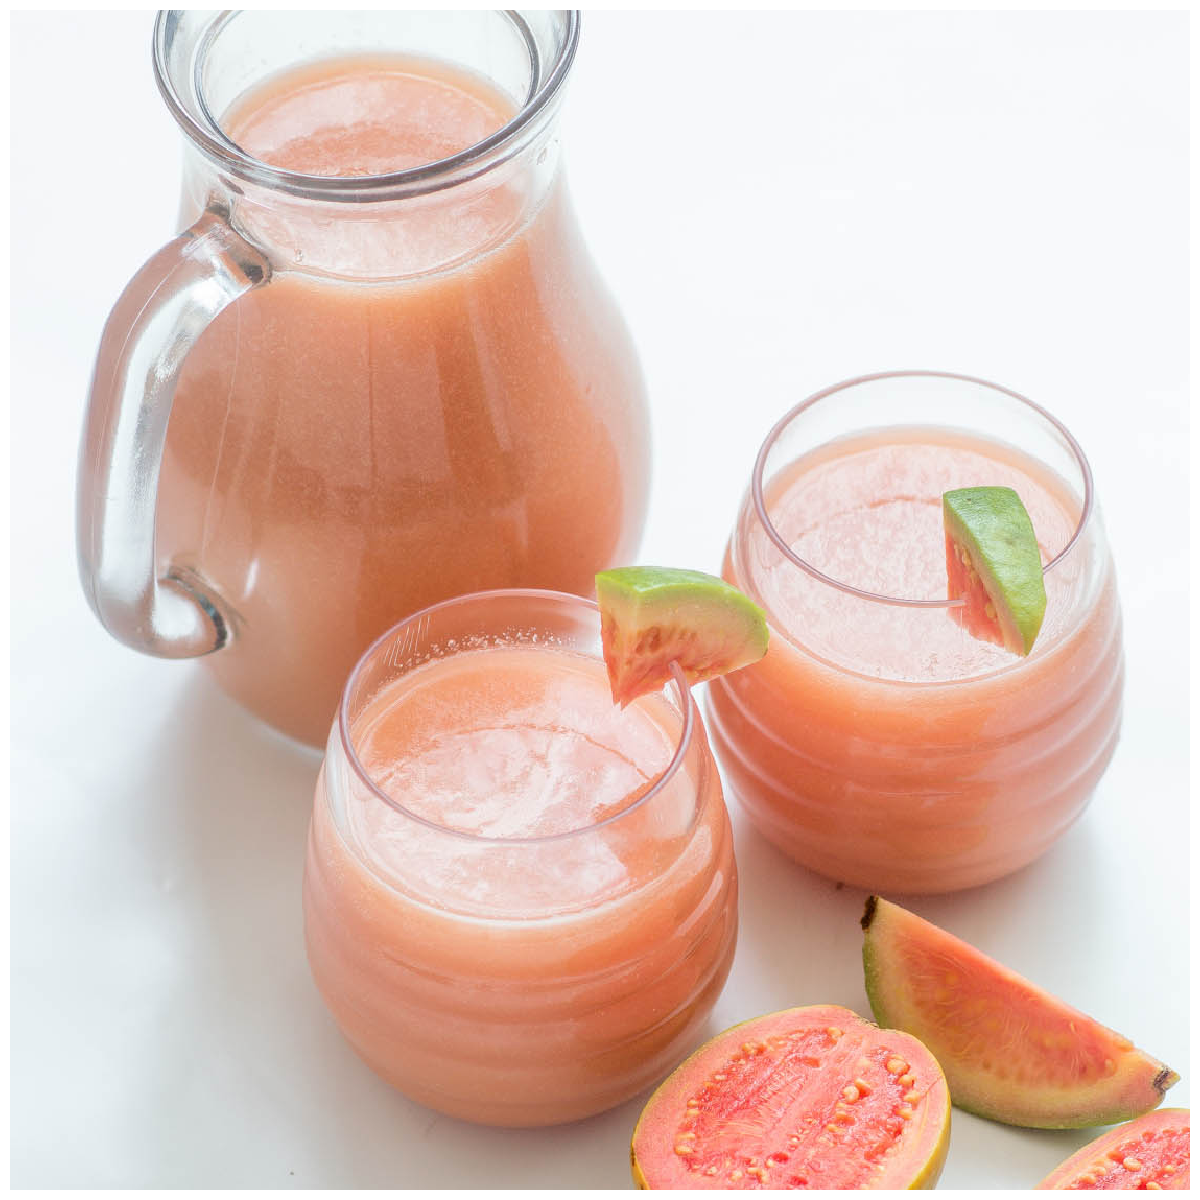 https://thatgirlcookshealthy.com/wp-content/uploads/2022/07/Guava-Juice-Recipe-image-1.png